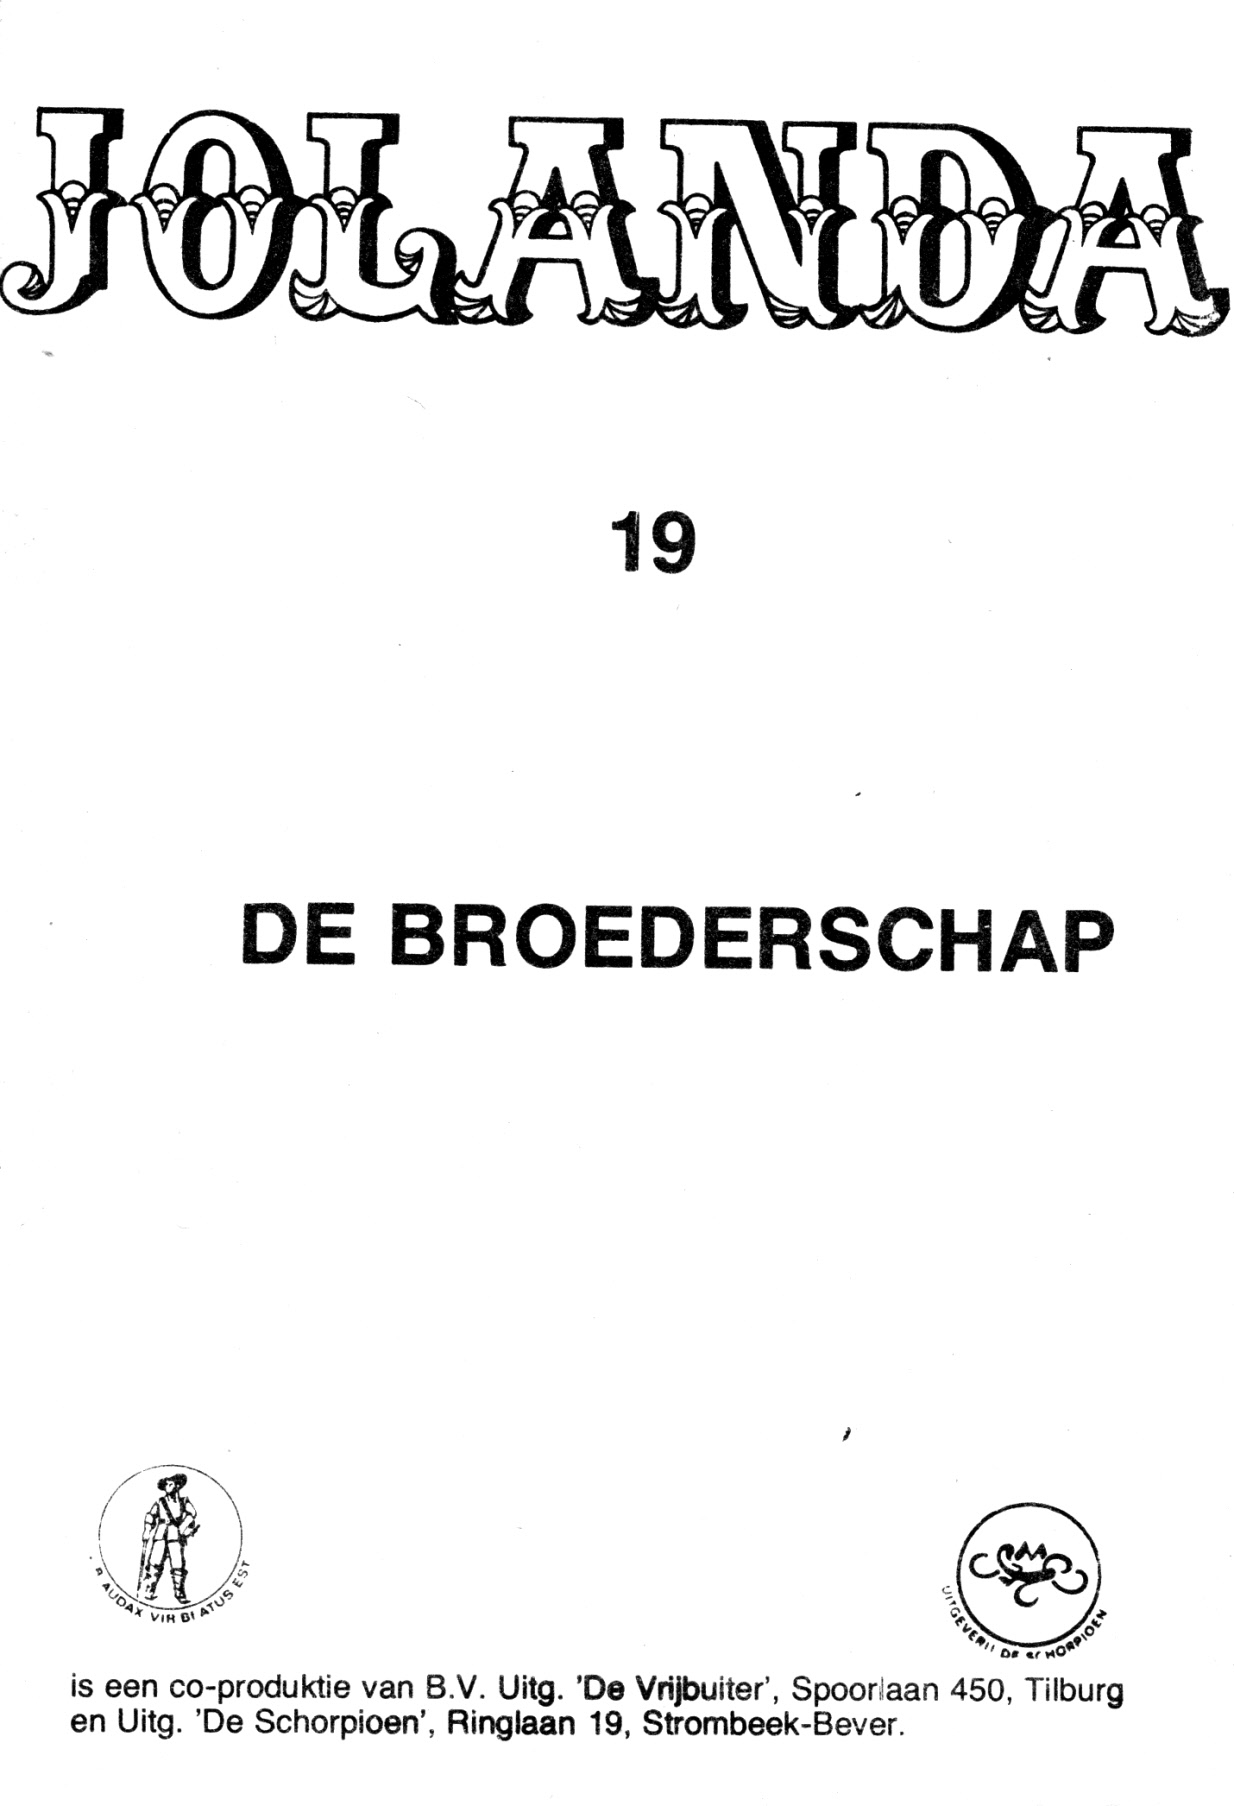 Jolanda - 19 - De Broederschap (Dutch) 1